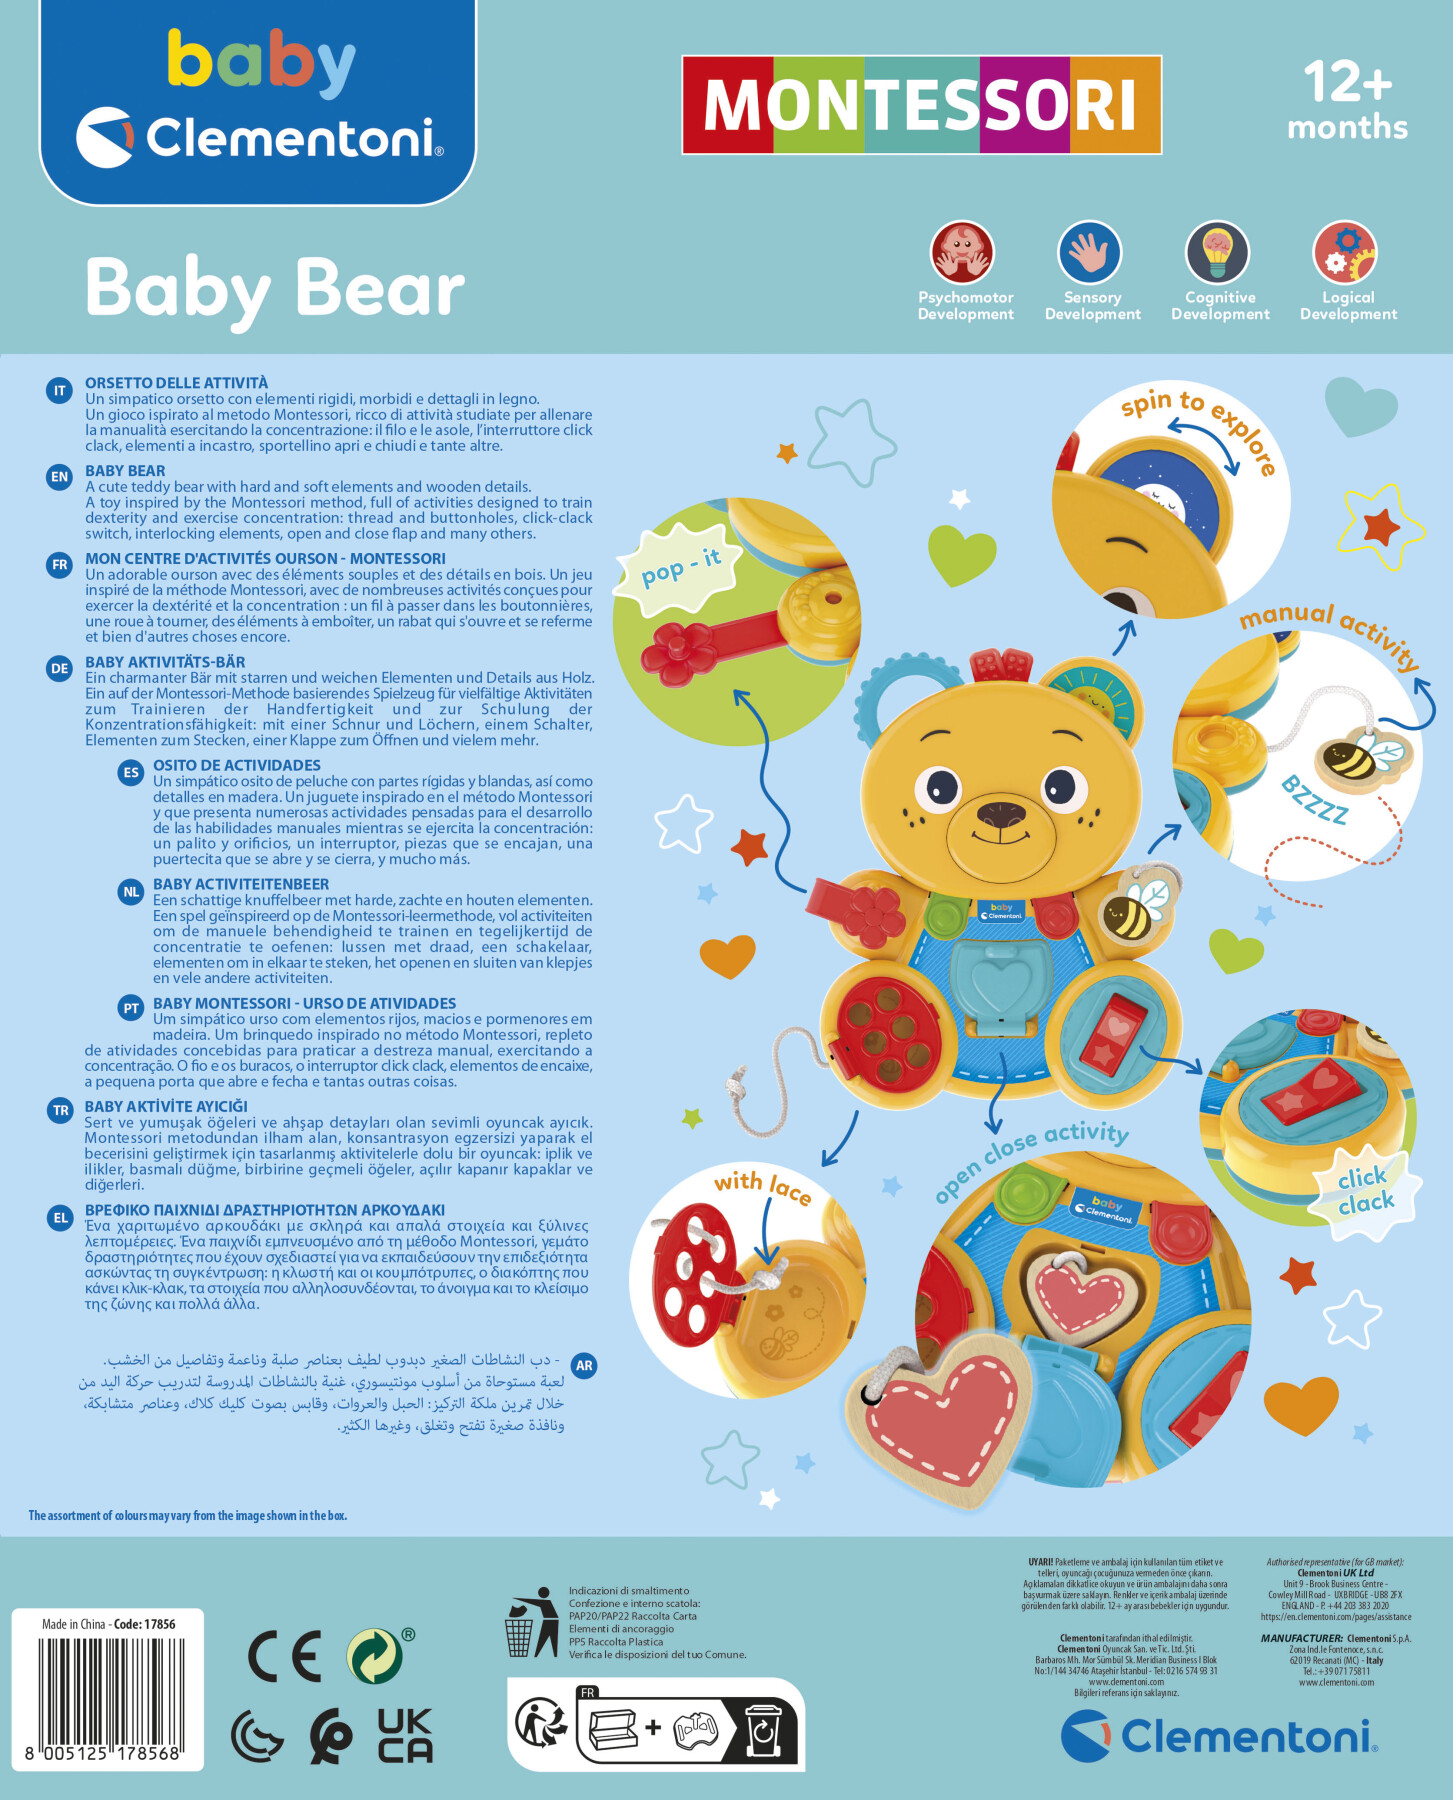 Baby clementoni montessori baby bear - BABY CLEMENTONI